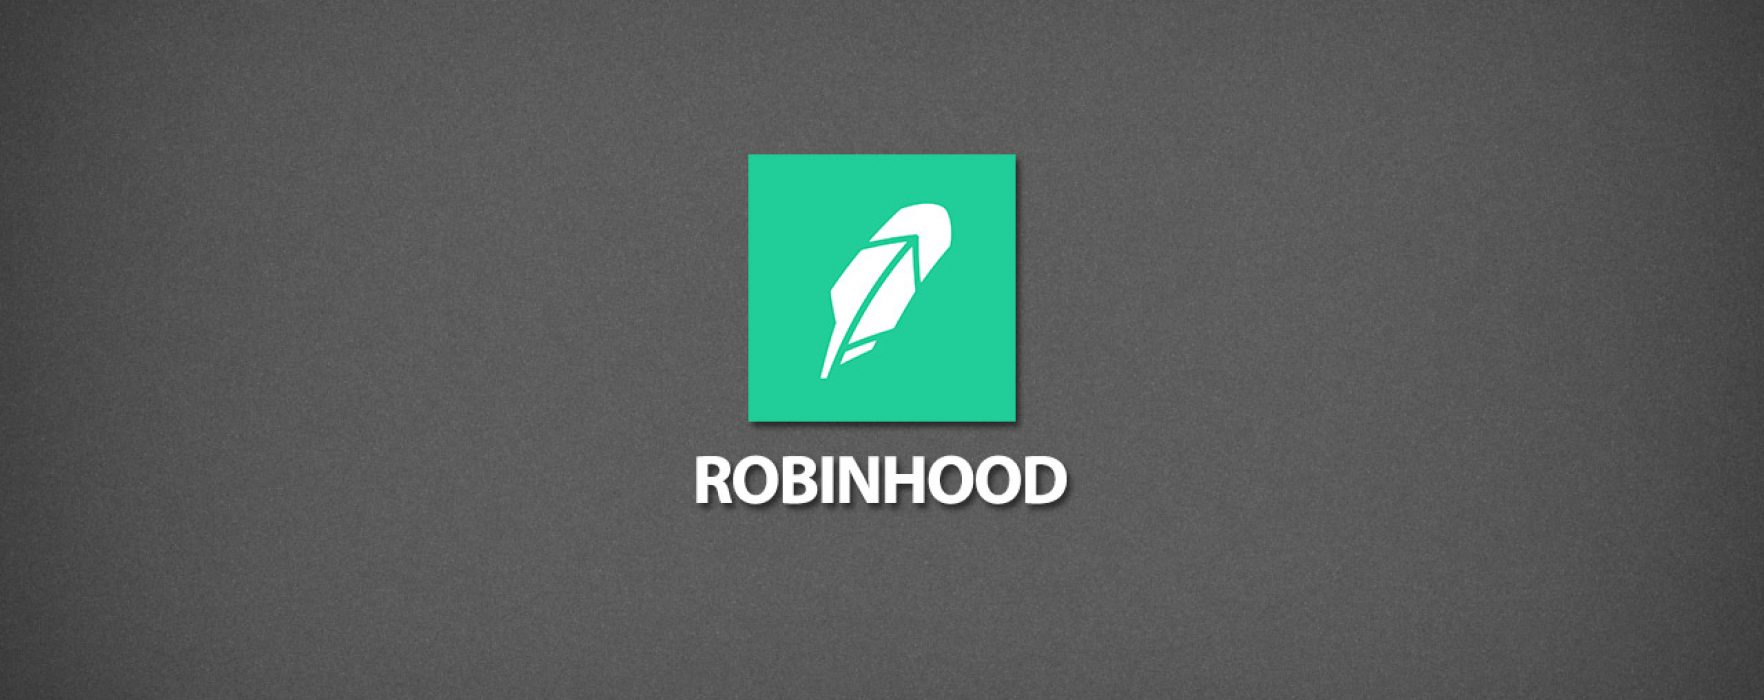 Robinhood将允许散户投资者购买IPO-第1张图片